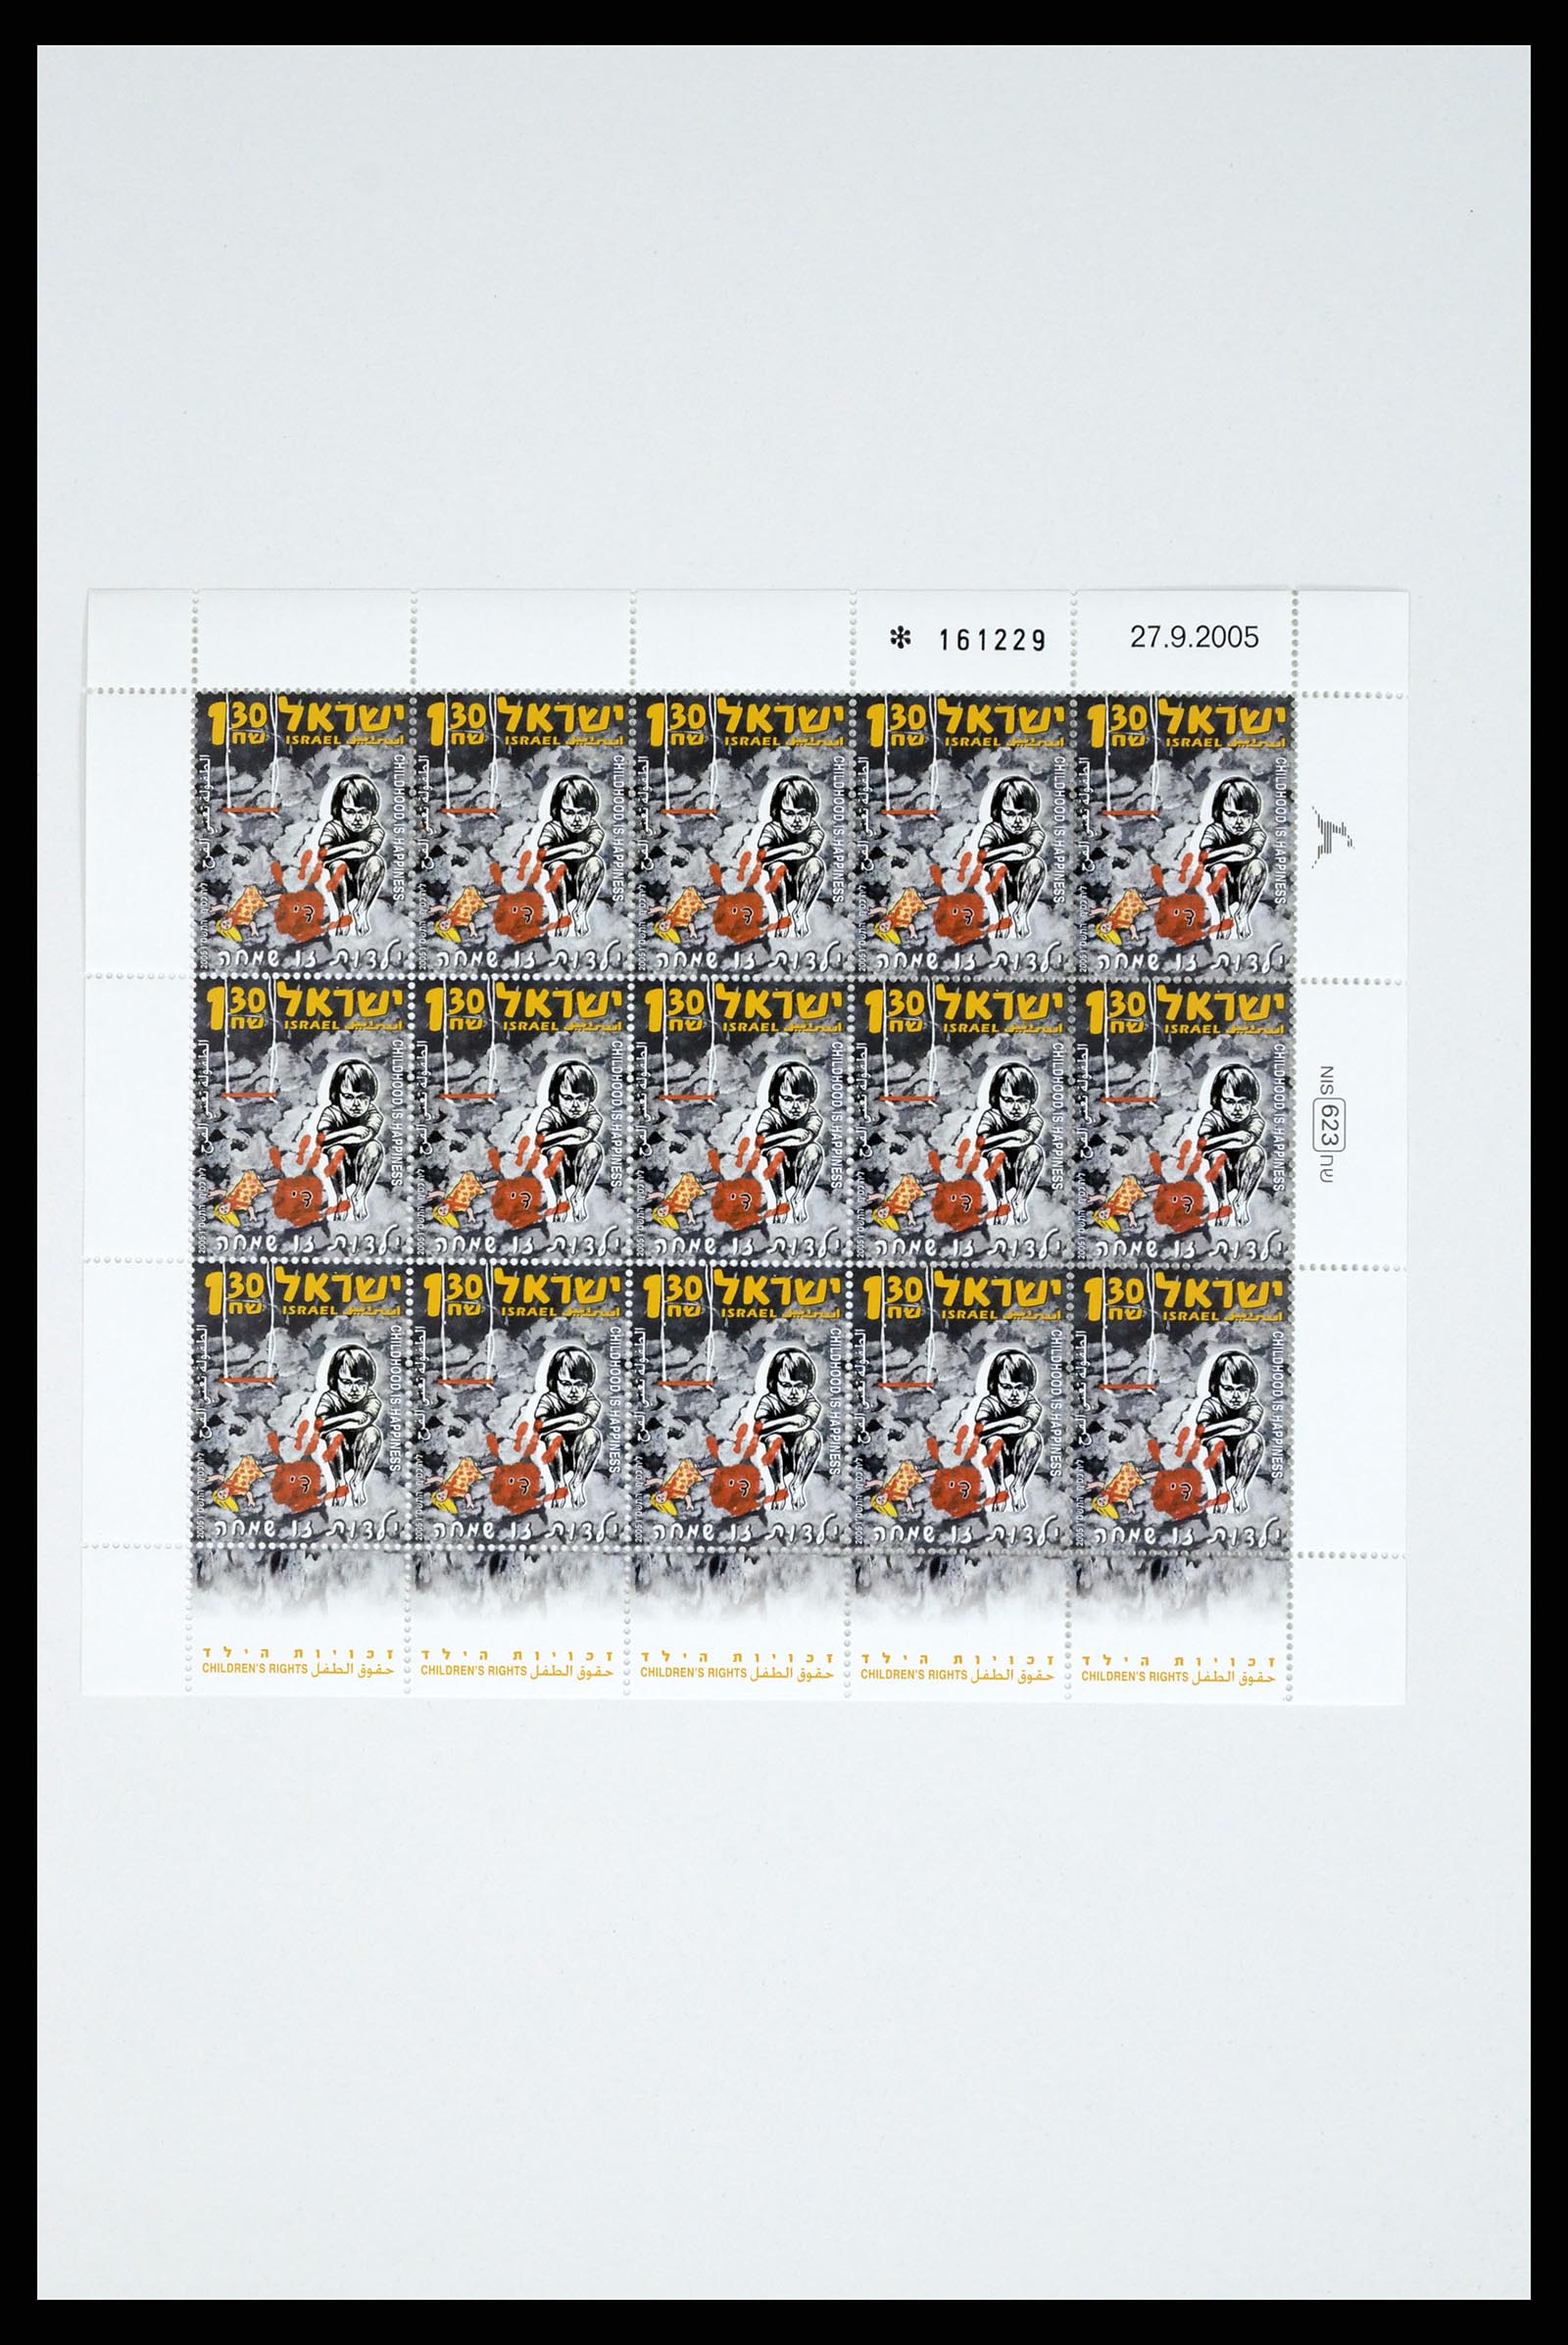 37779 365 - Stamp collection 37779 Israel sheetlets 1986-2009.